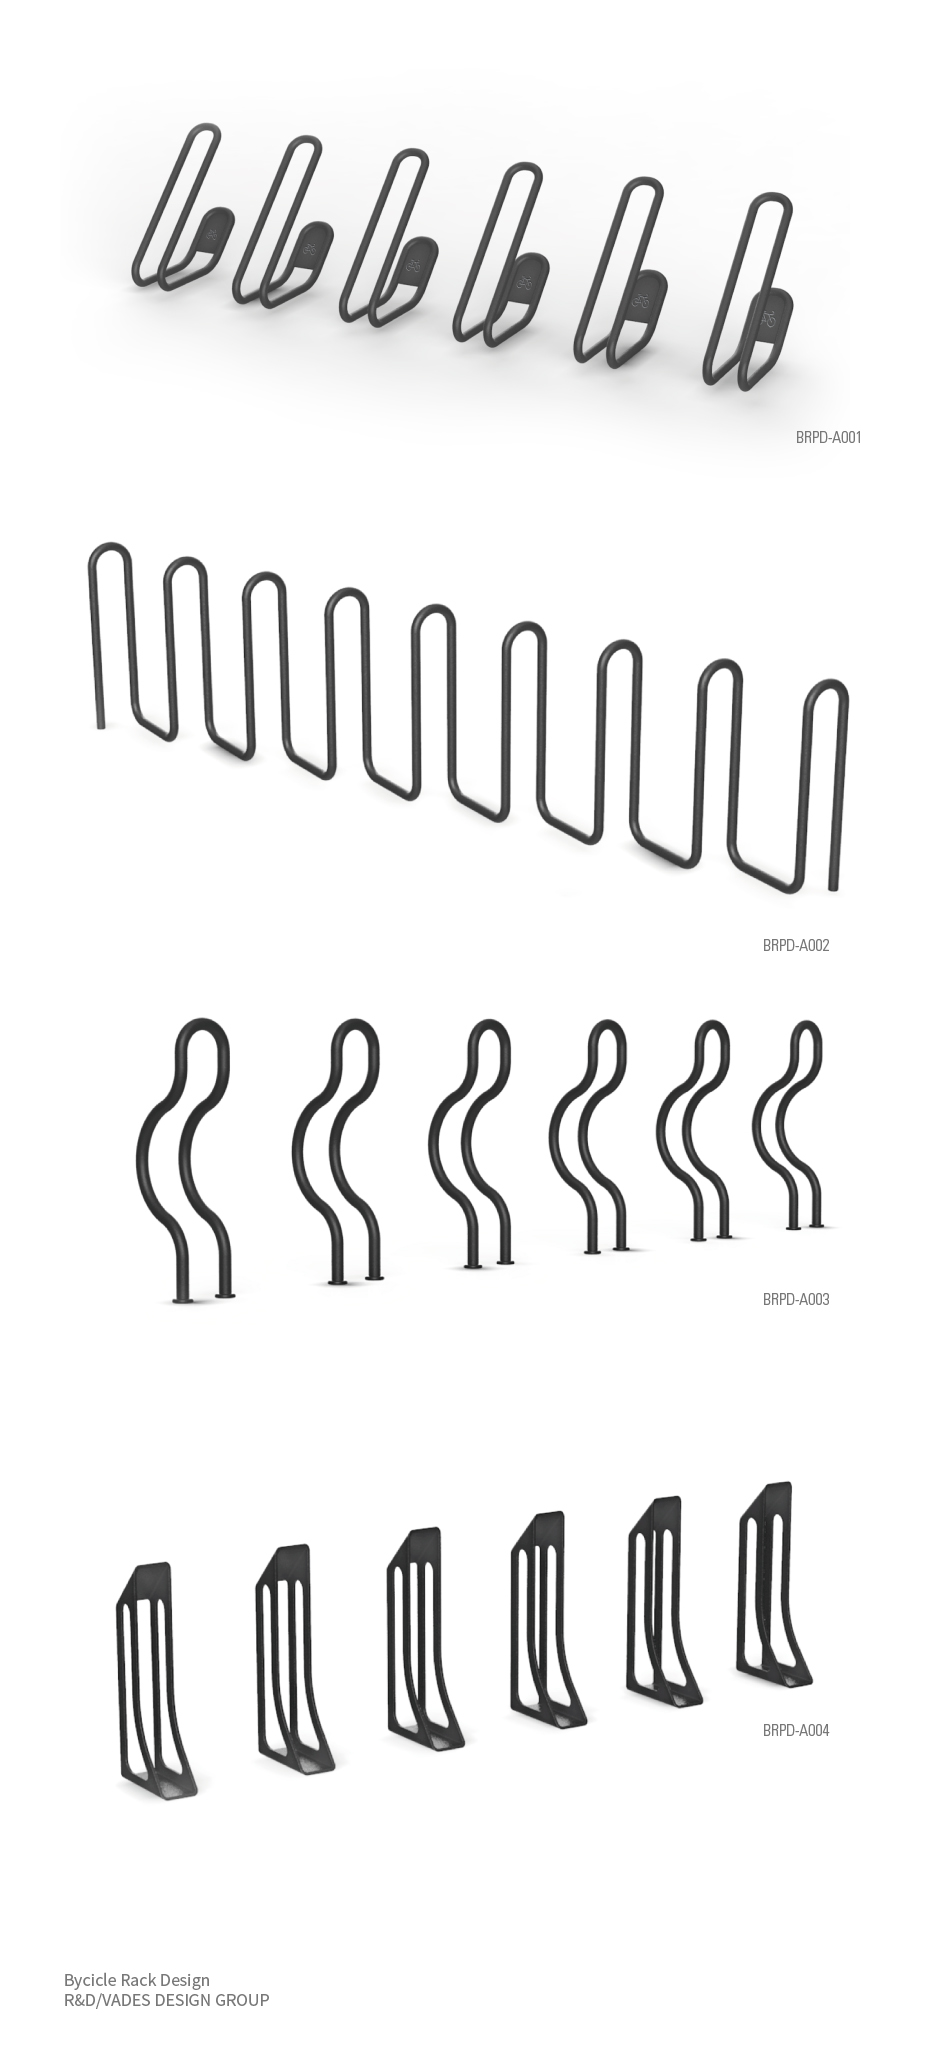 Bycicle Rack Design - R&D/VADES DESIGN GROUP